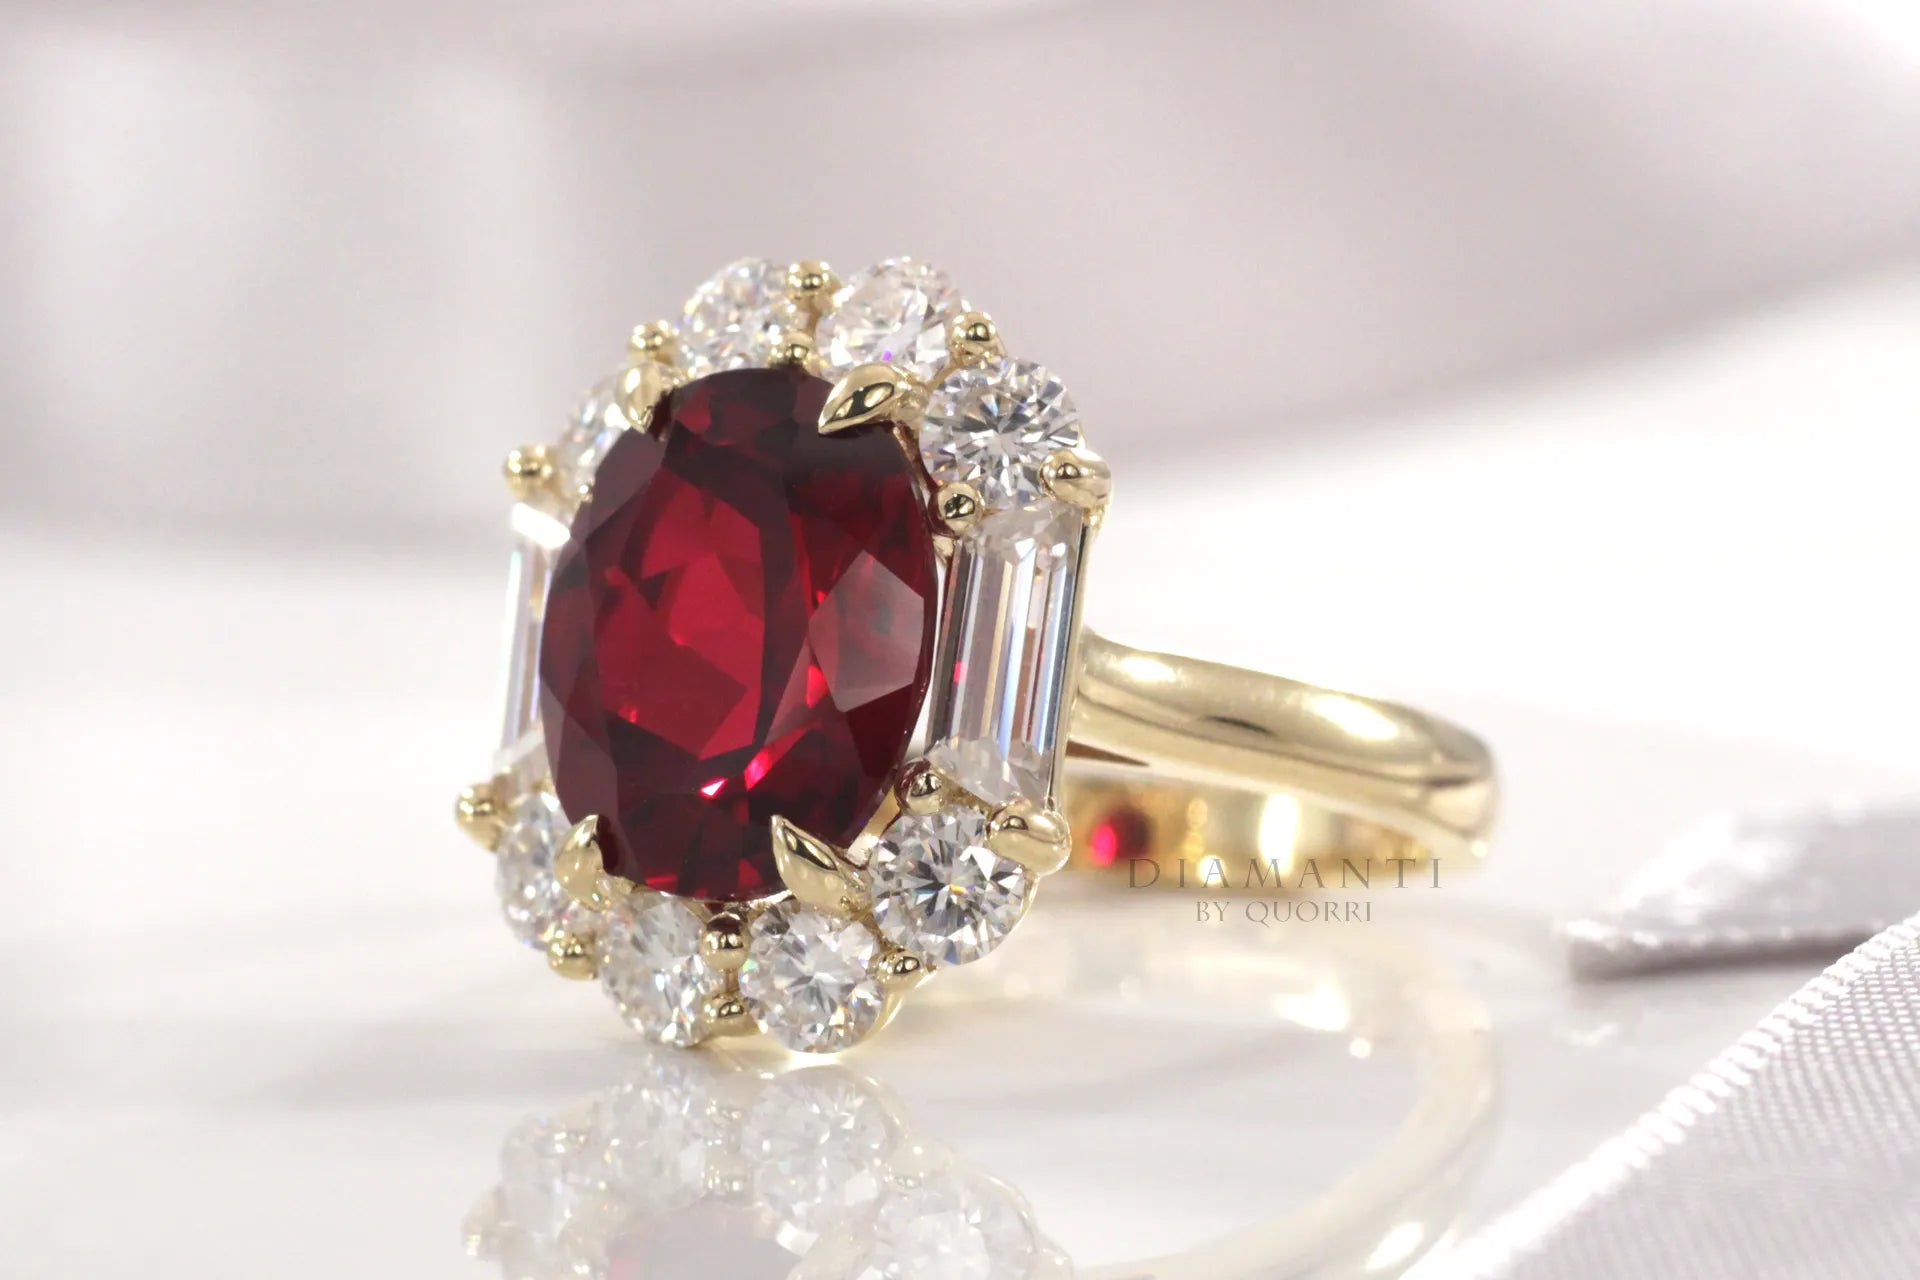 3 carat designer vintage oval blood red ruby engagement ring Quorri Canada